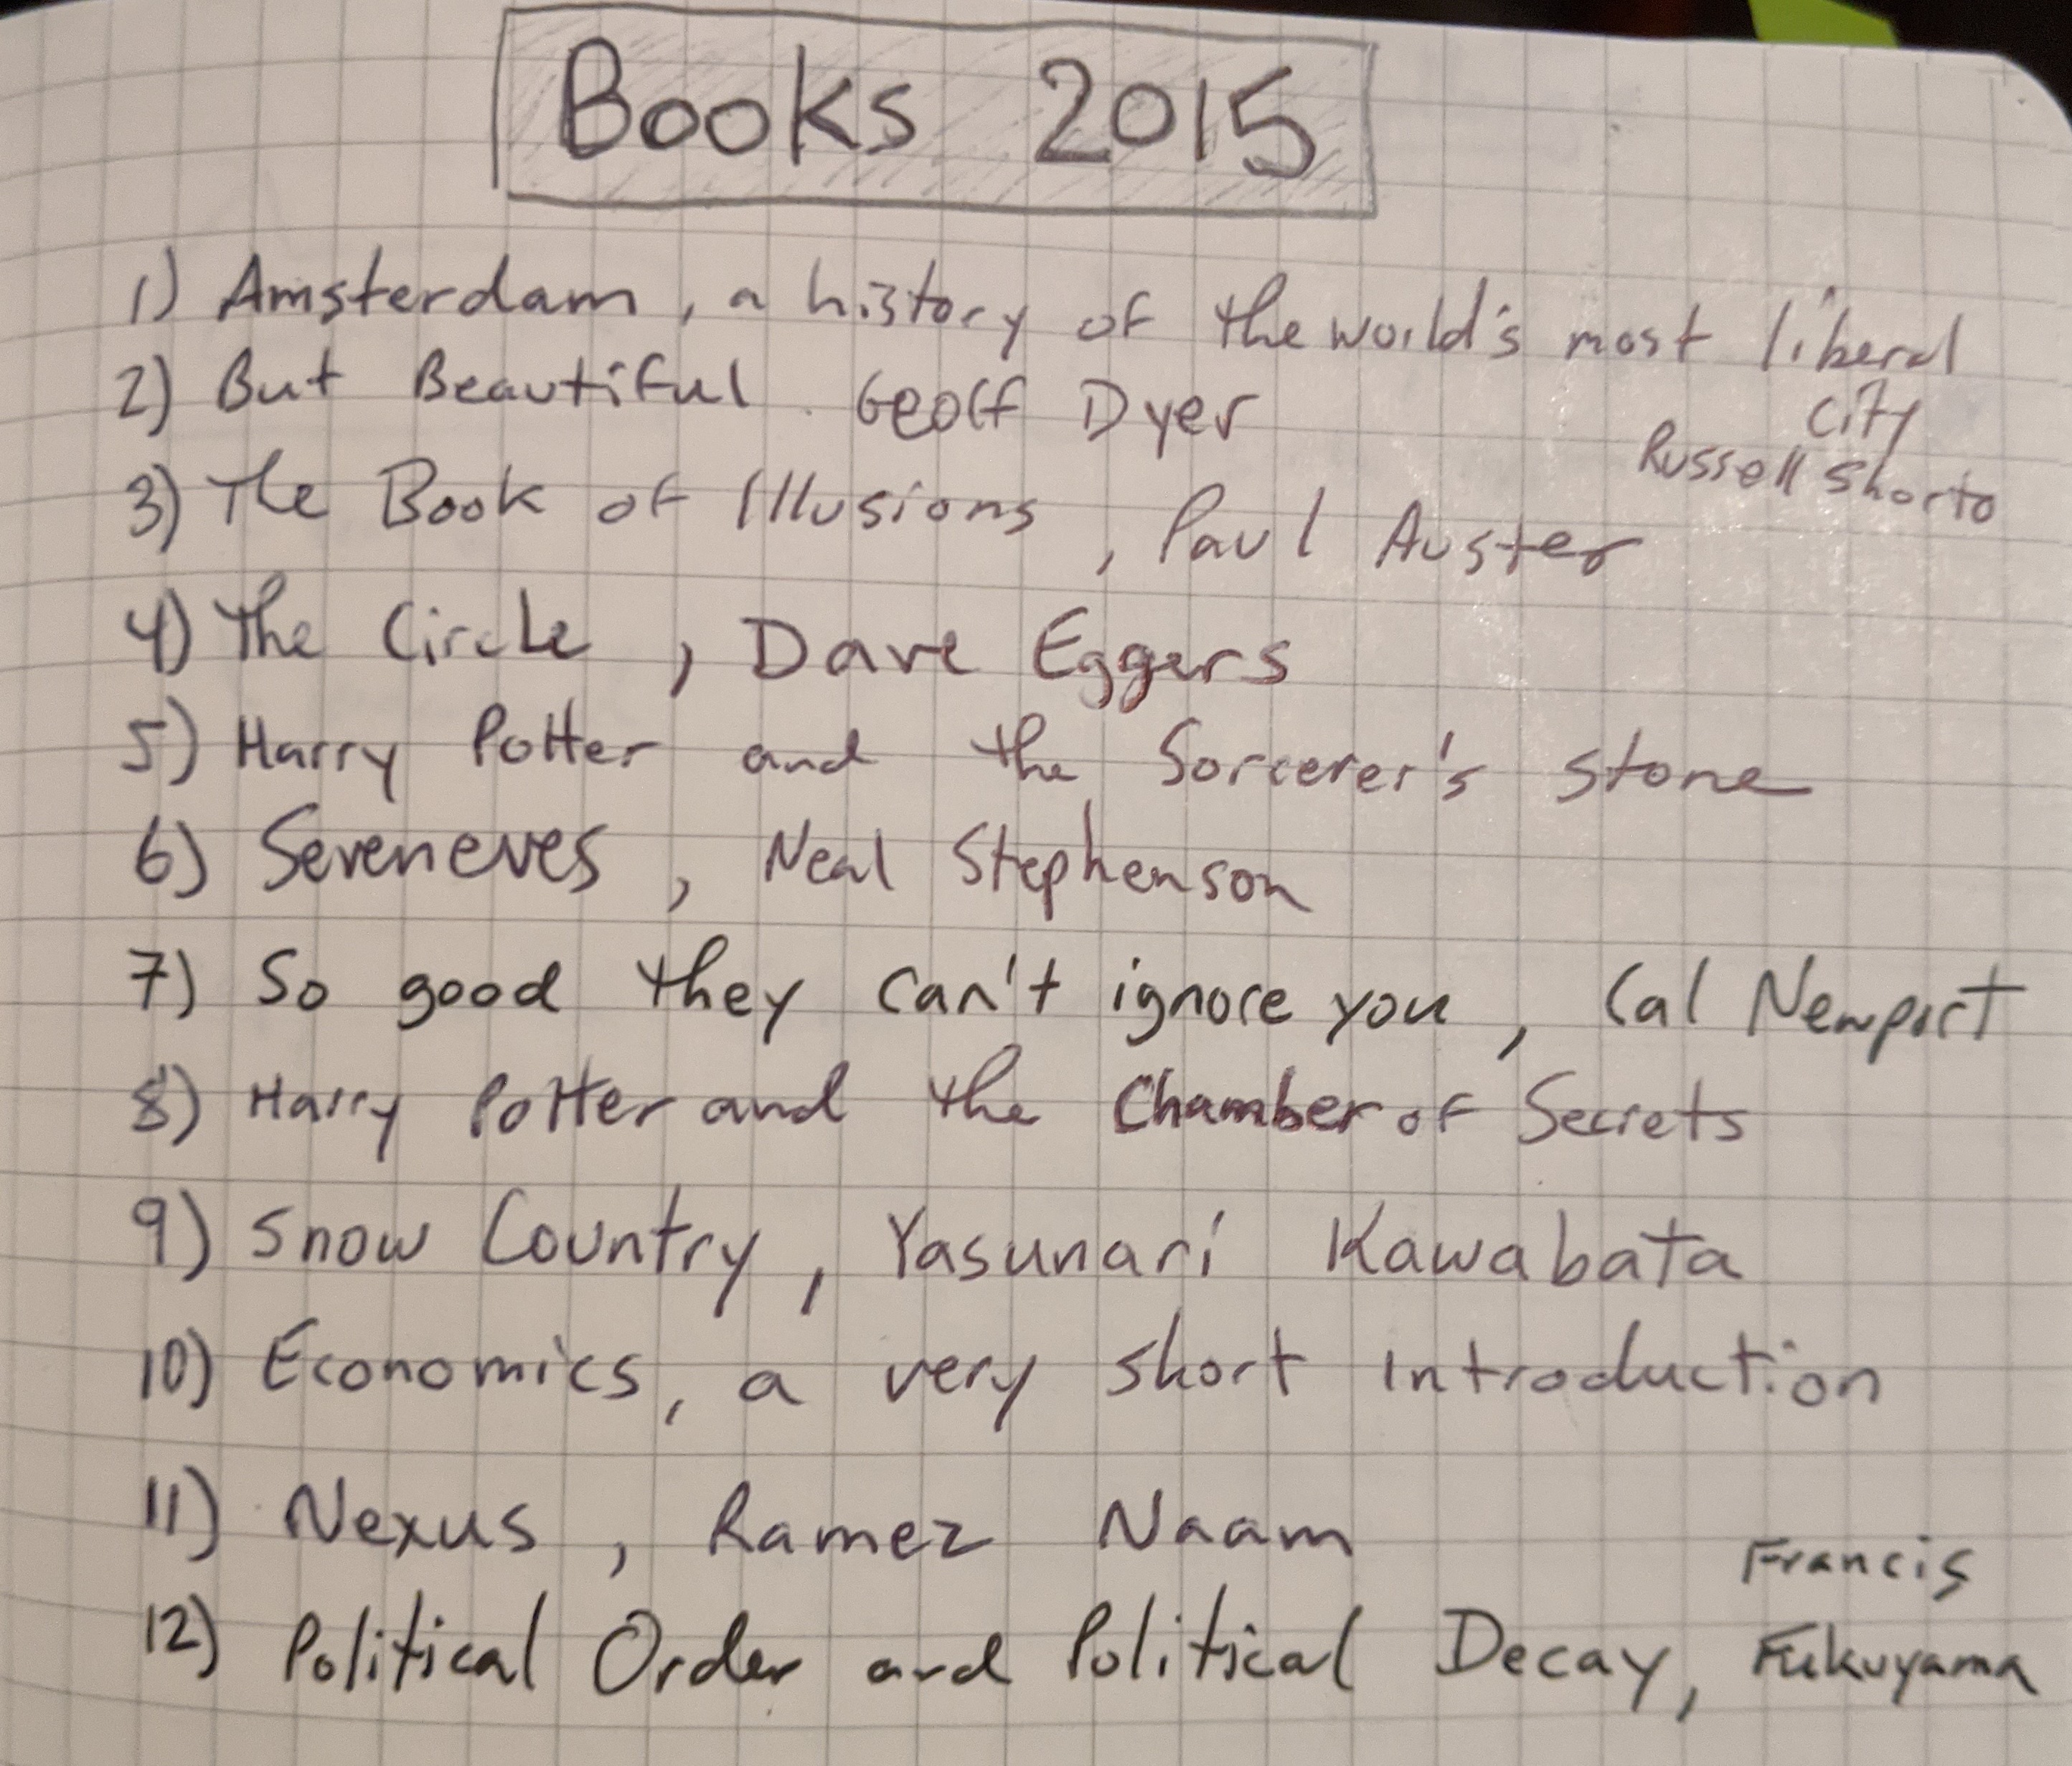 Books 2015